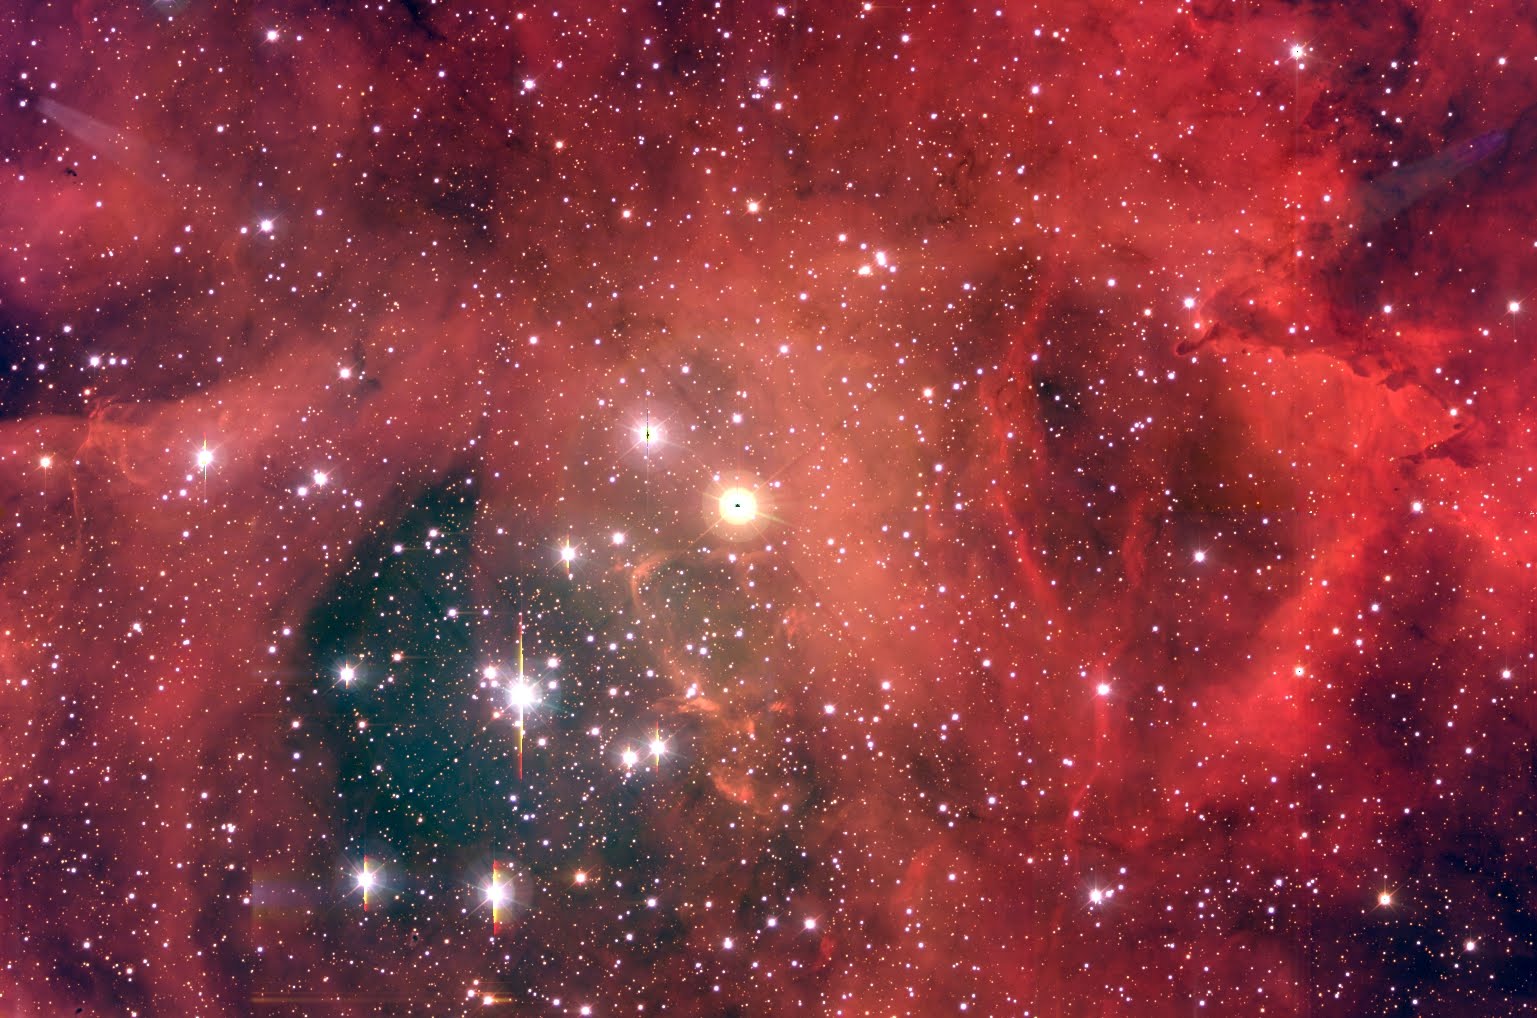 arka plan wallpaper,nebulosa,objeto astronómico,espacio exterior,atmósfera,universo